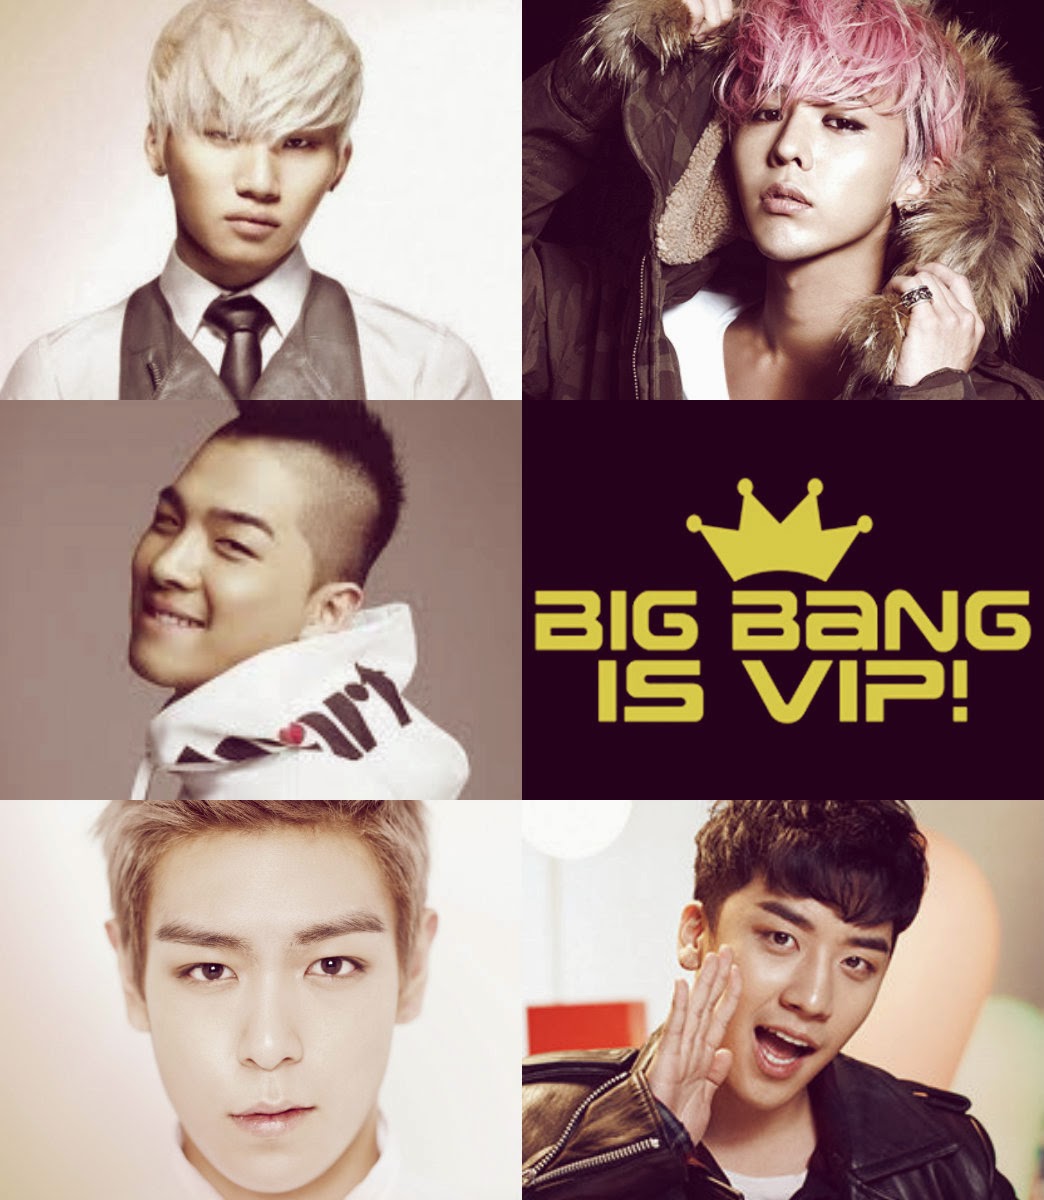 We love Bigbang!